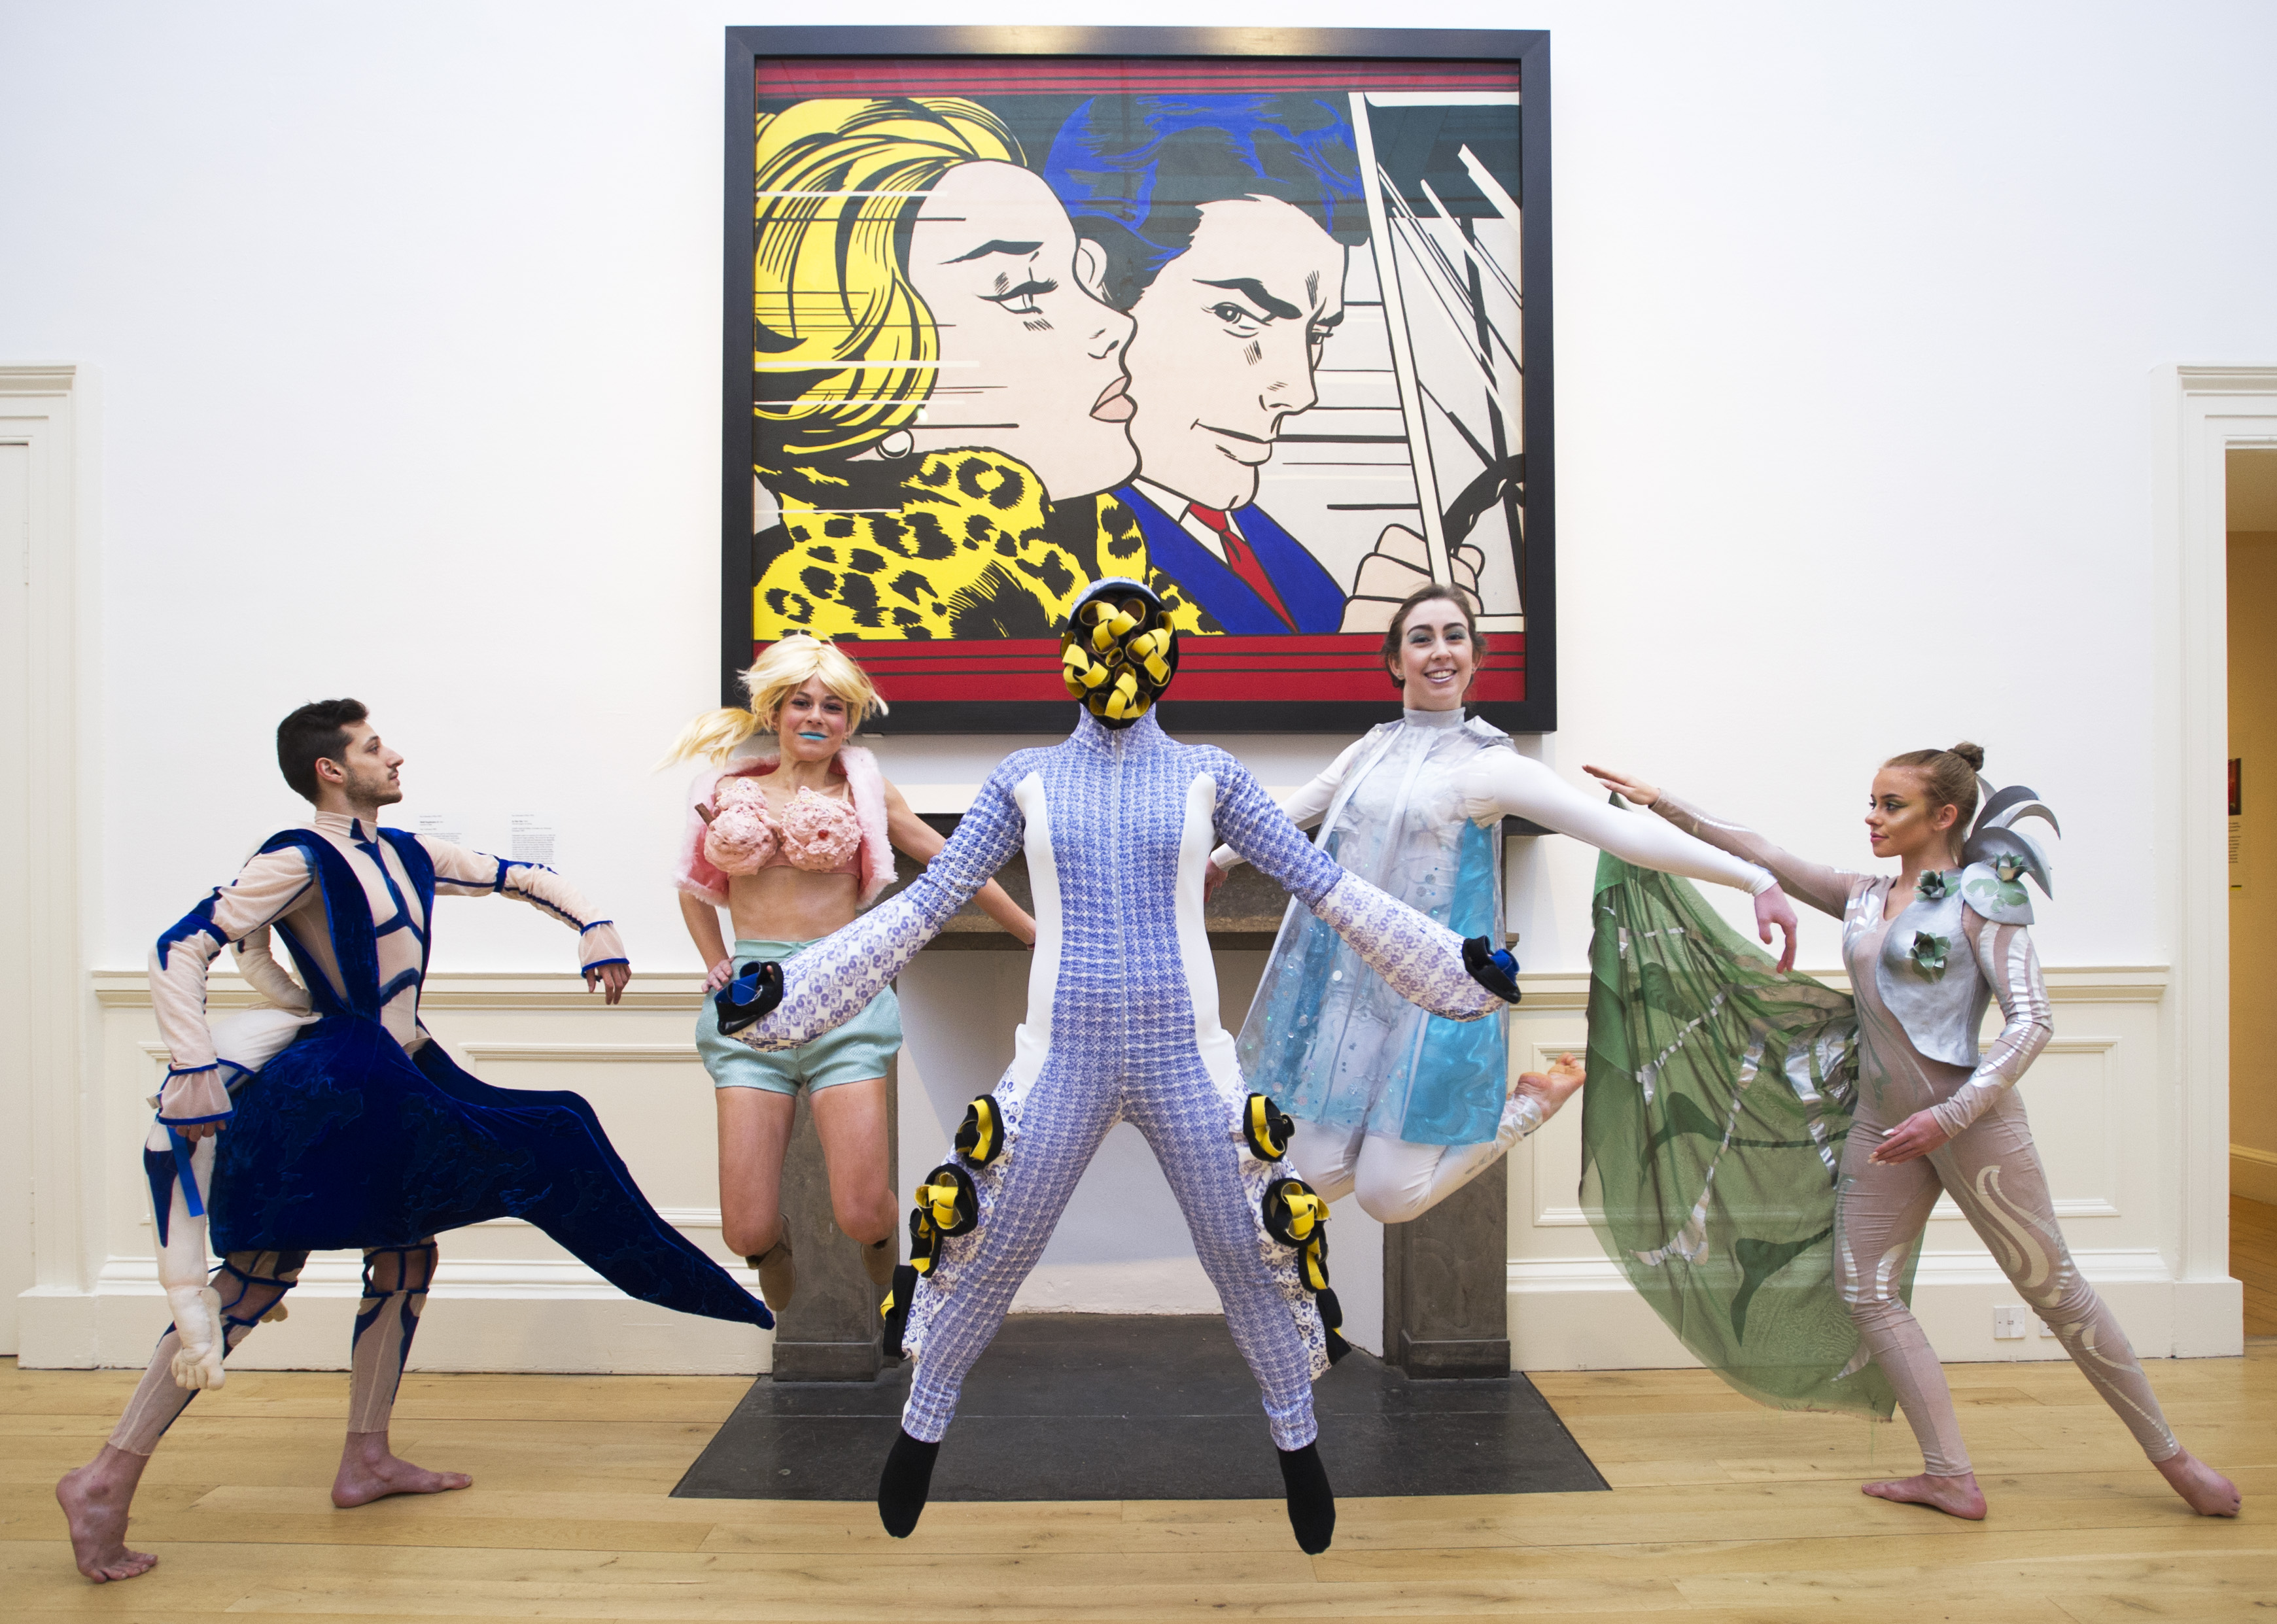 PASS dancers' costumes are works of art - Edinburgh College